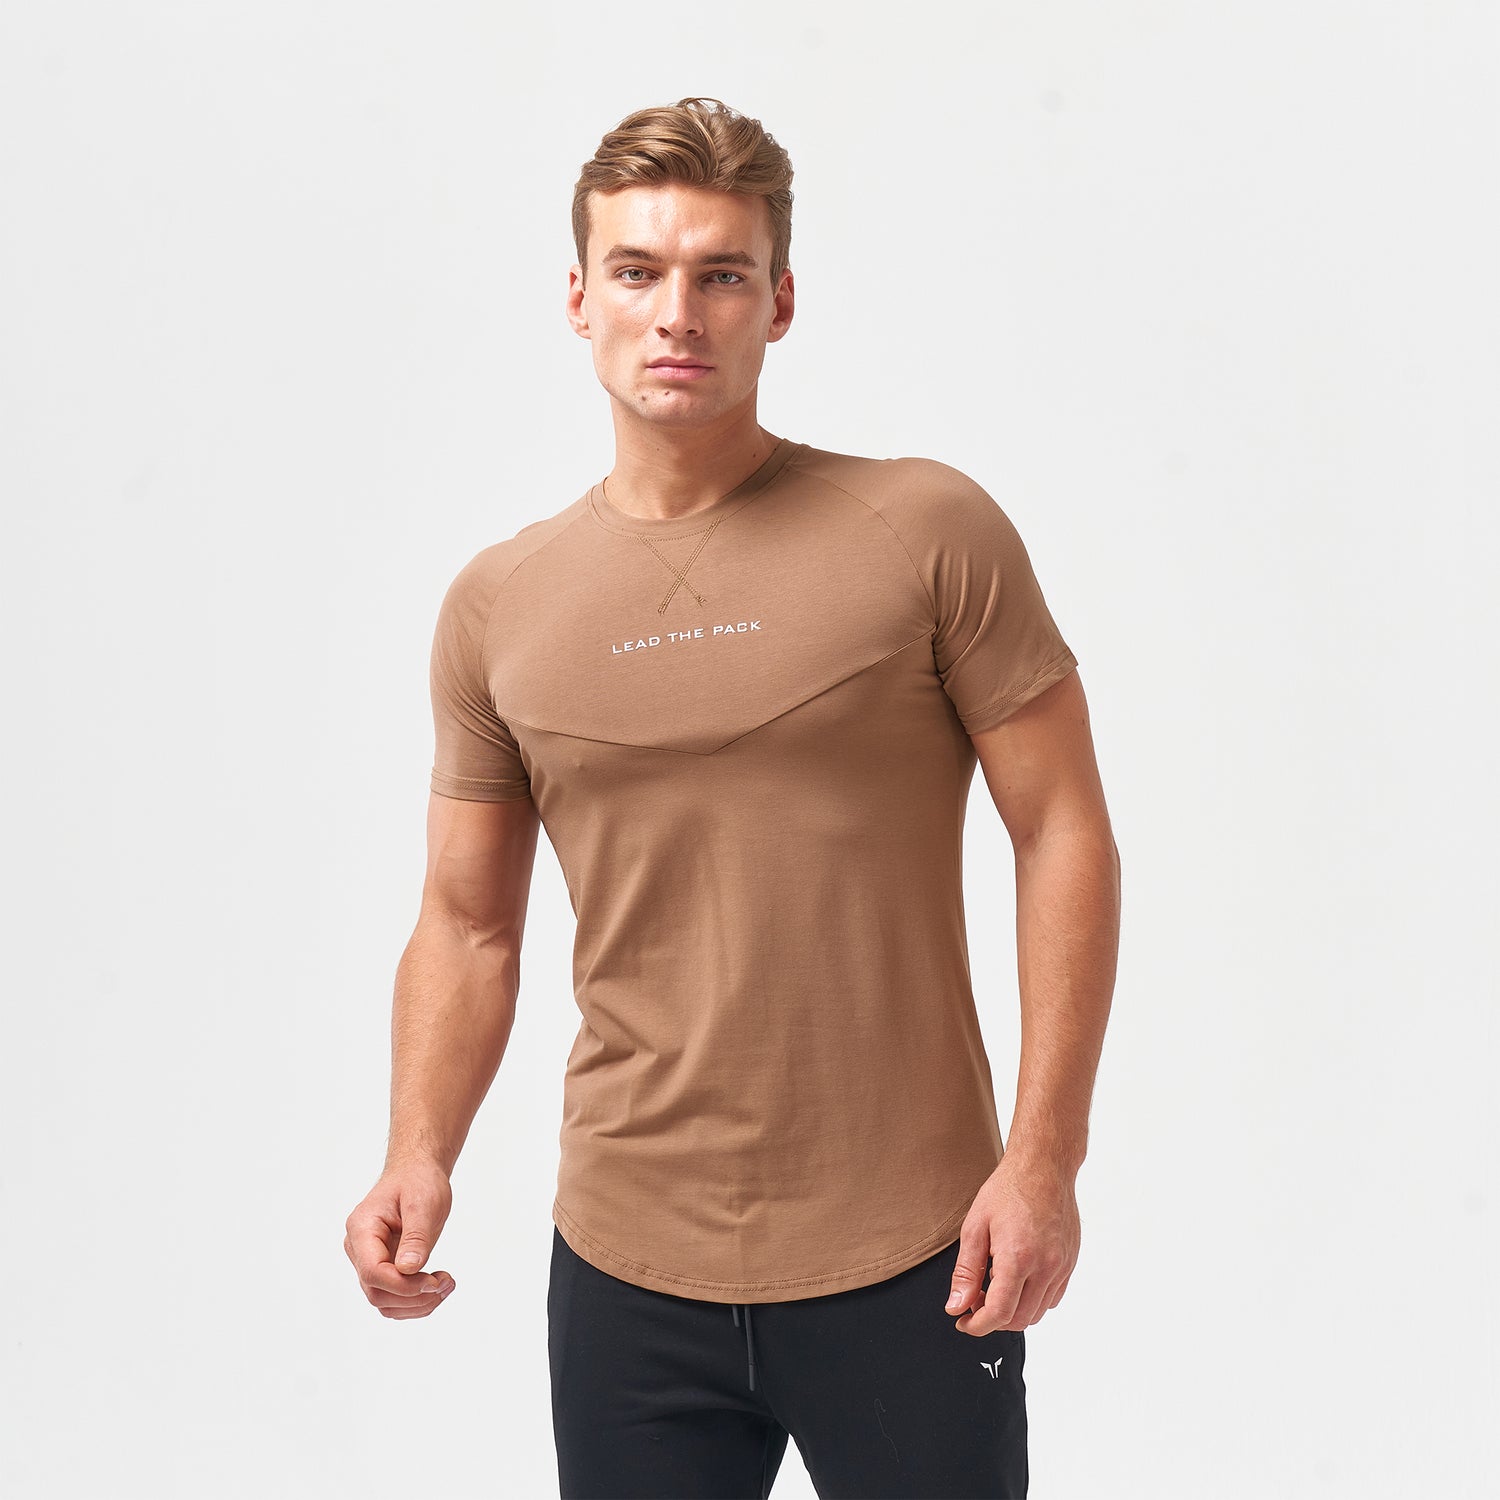 squatwolf-gym-wear-statement-tee-brown-workout-shirts-for-men